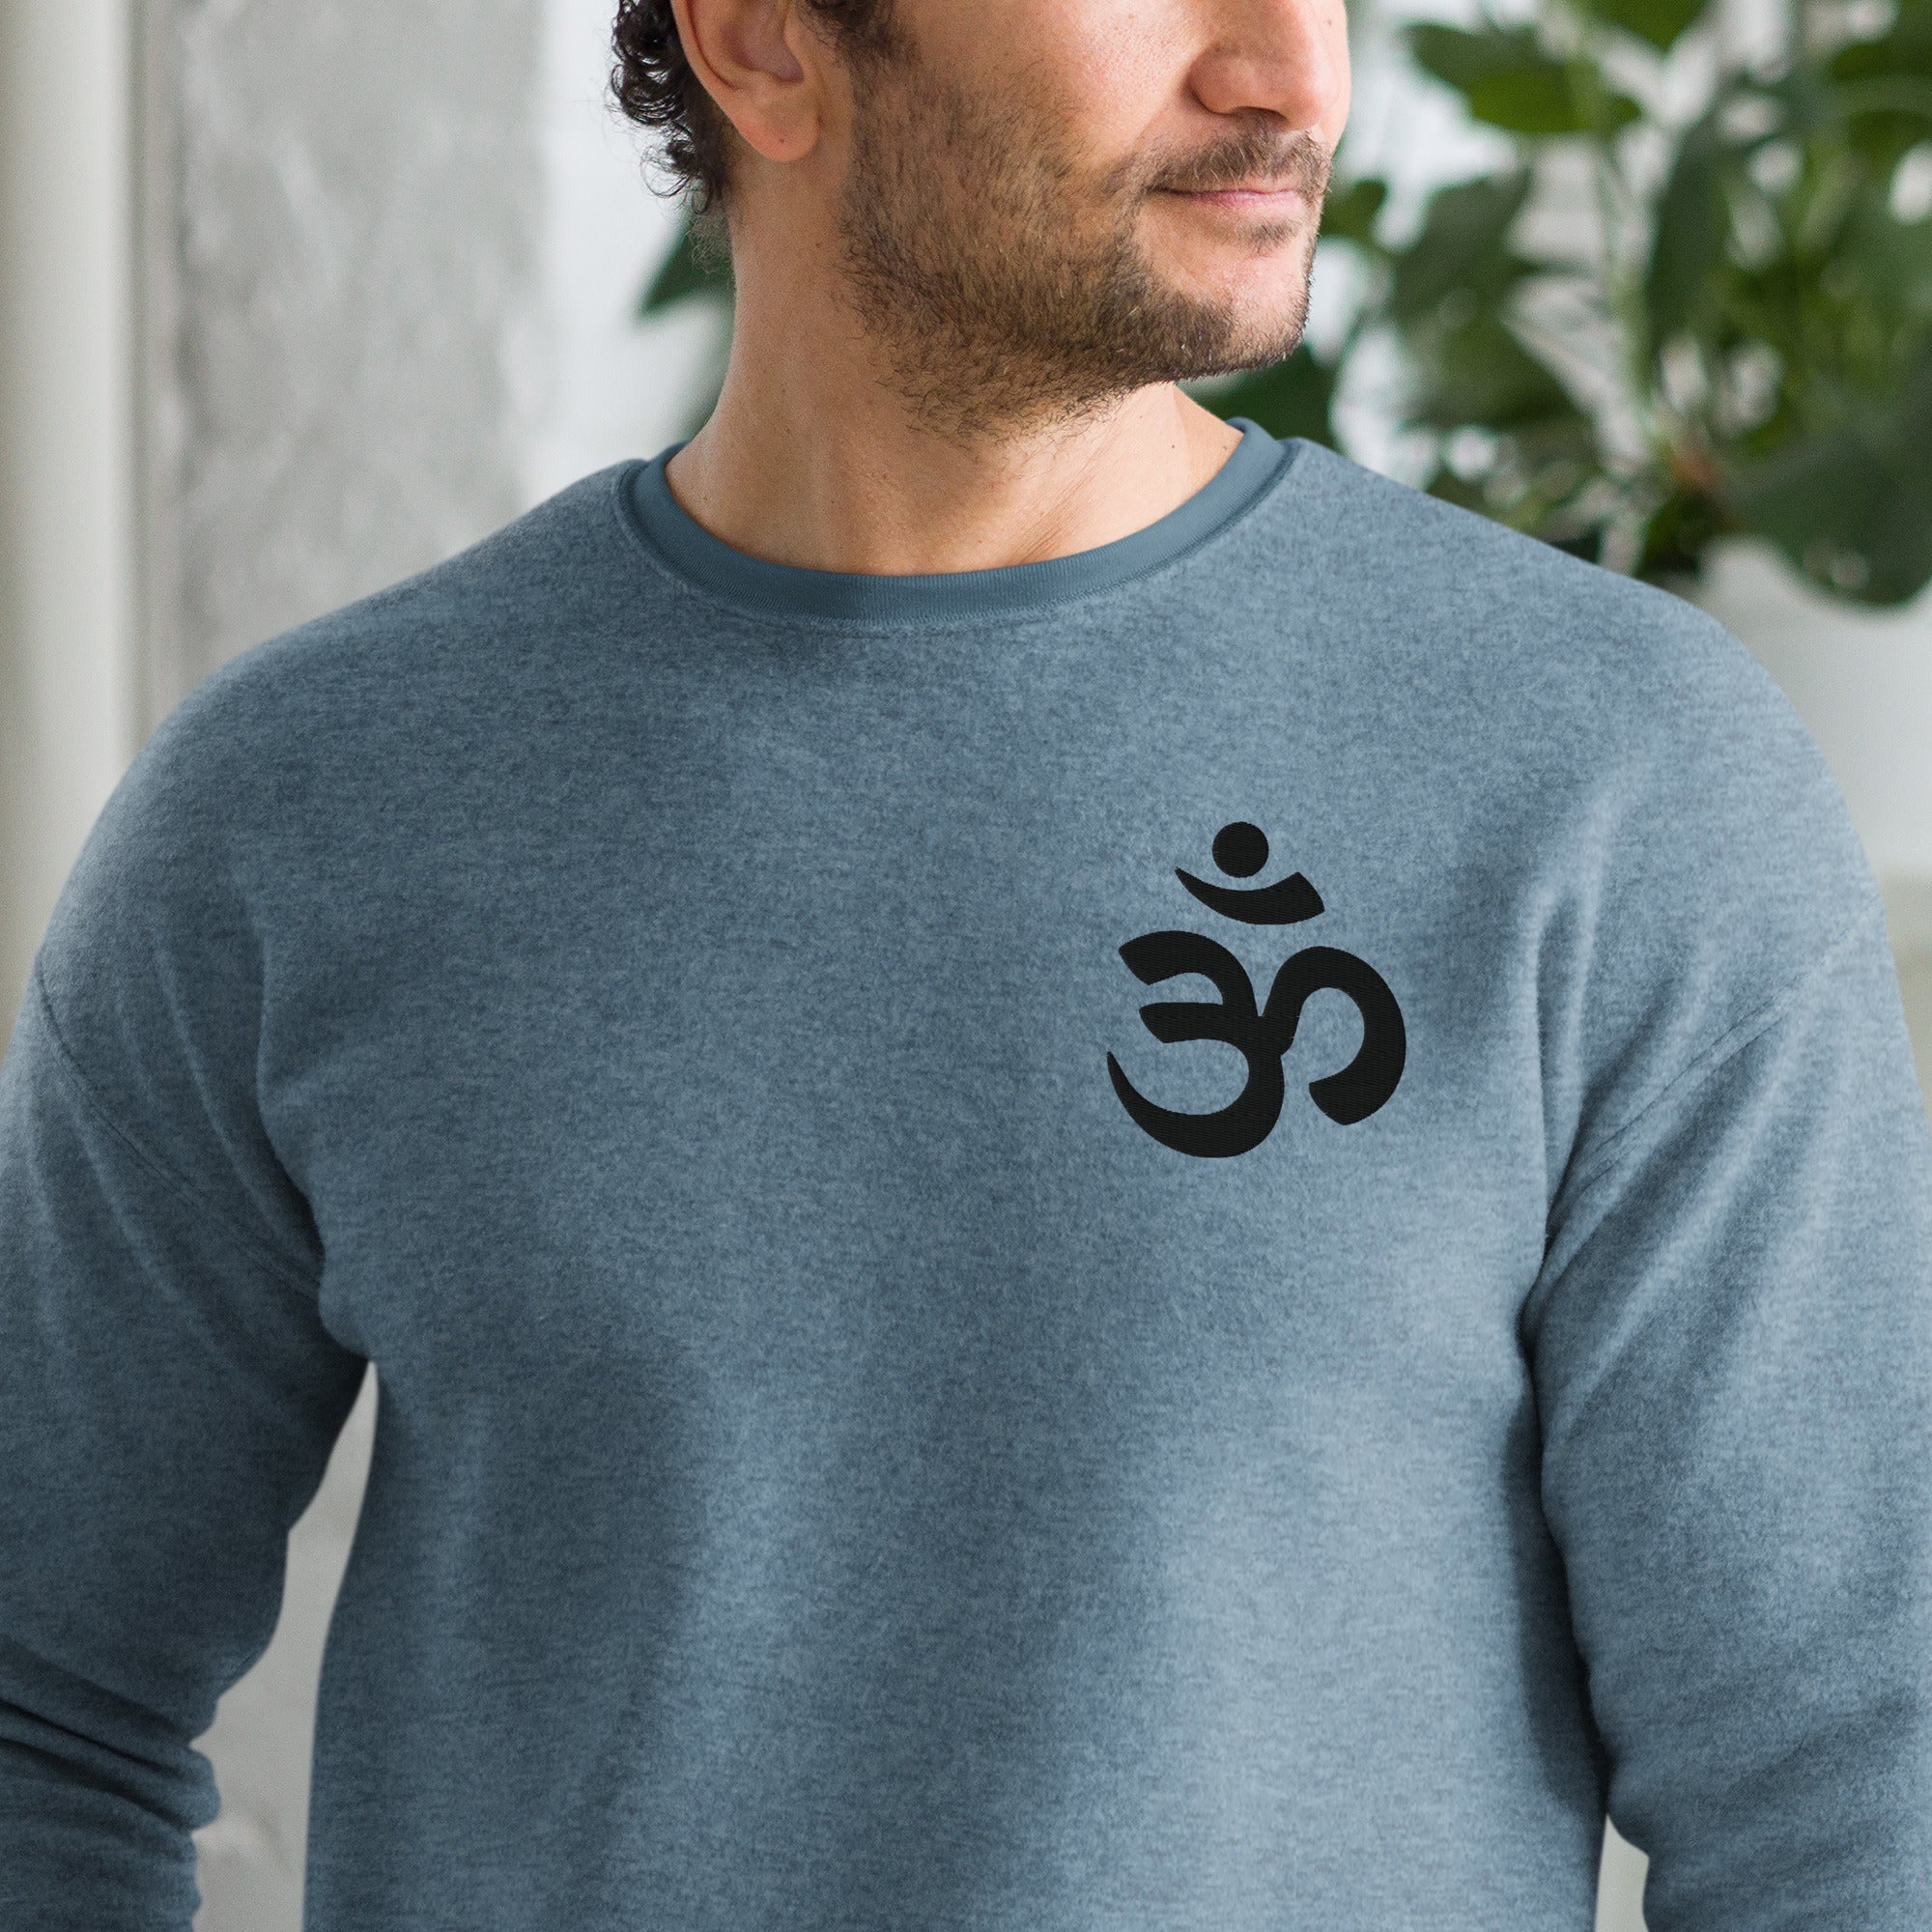 Couple Matching - Unisex sueded fleece yoga sweatshirt - Personal Hour for Yoga and Meditations 